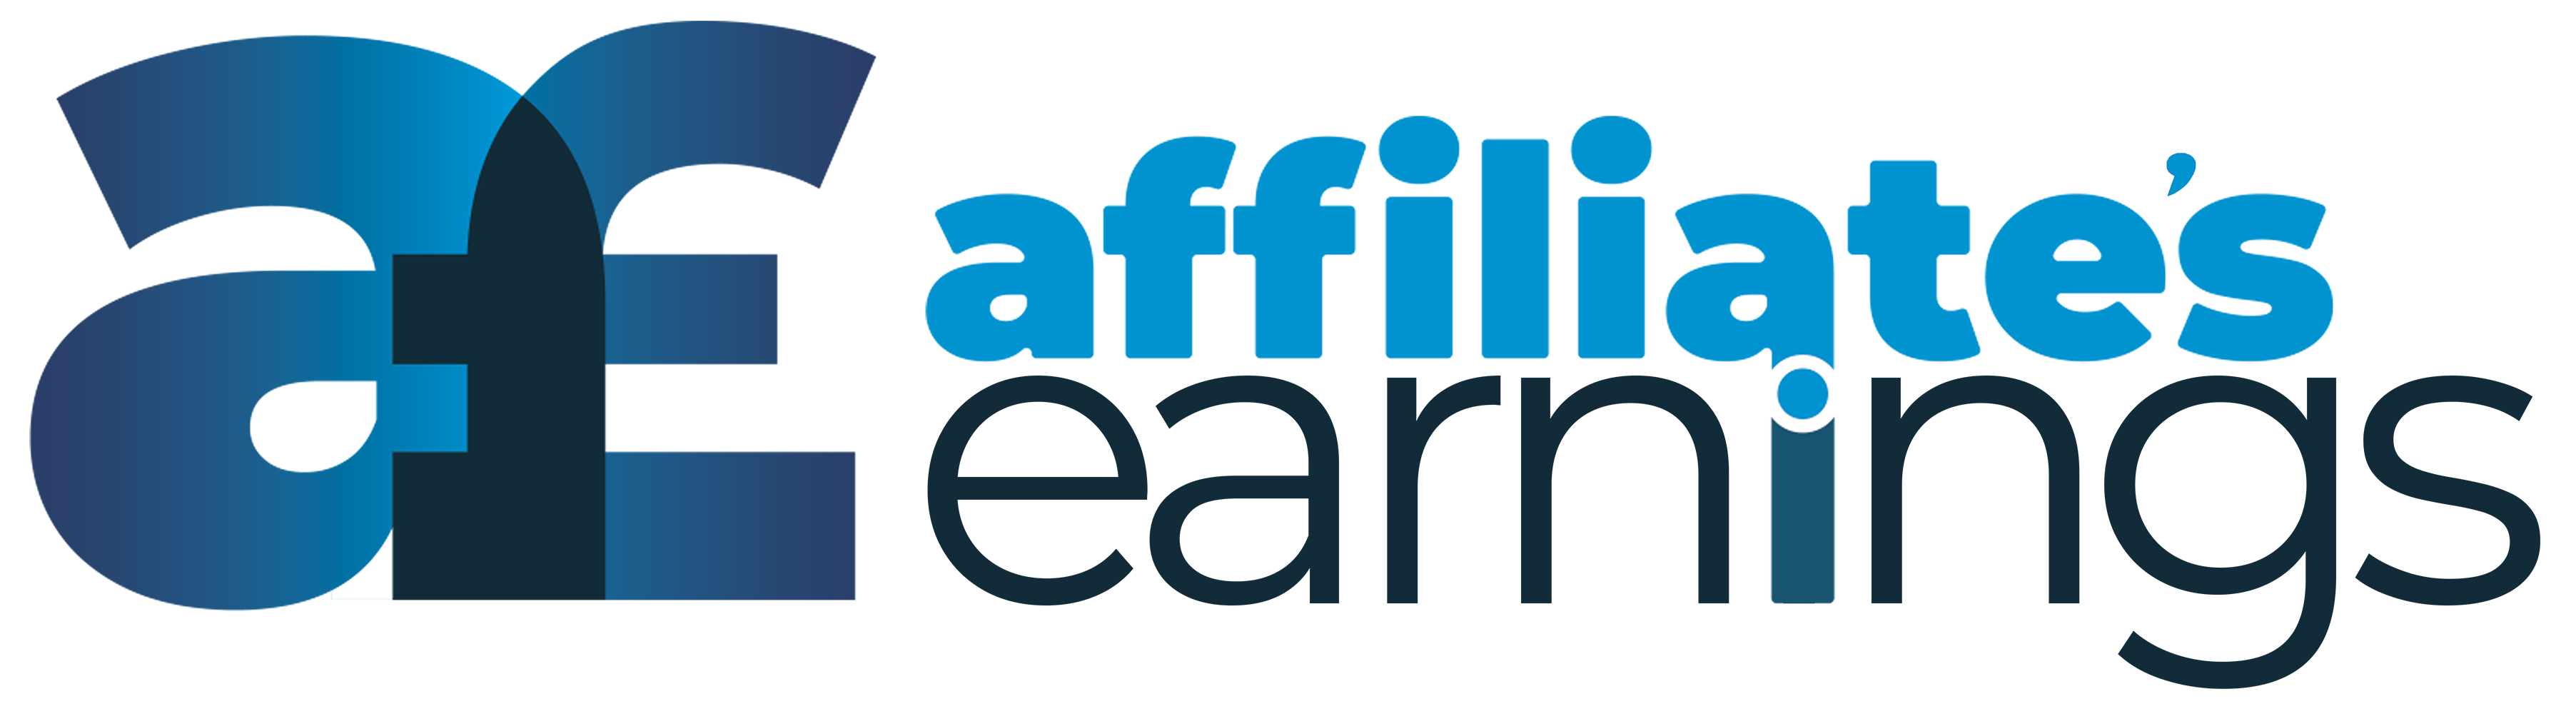 Affiliates Earnings Logo